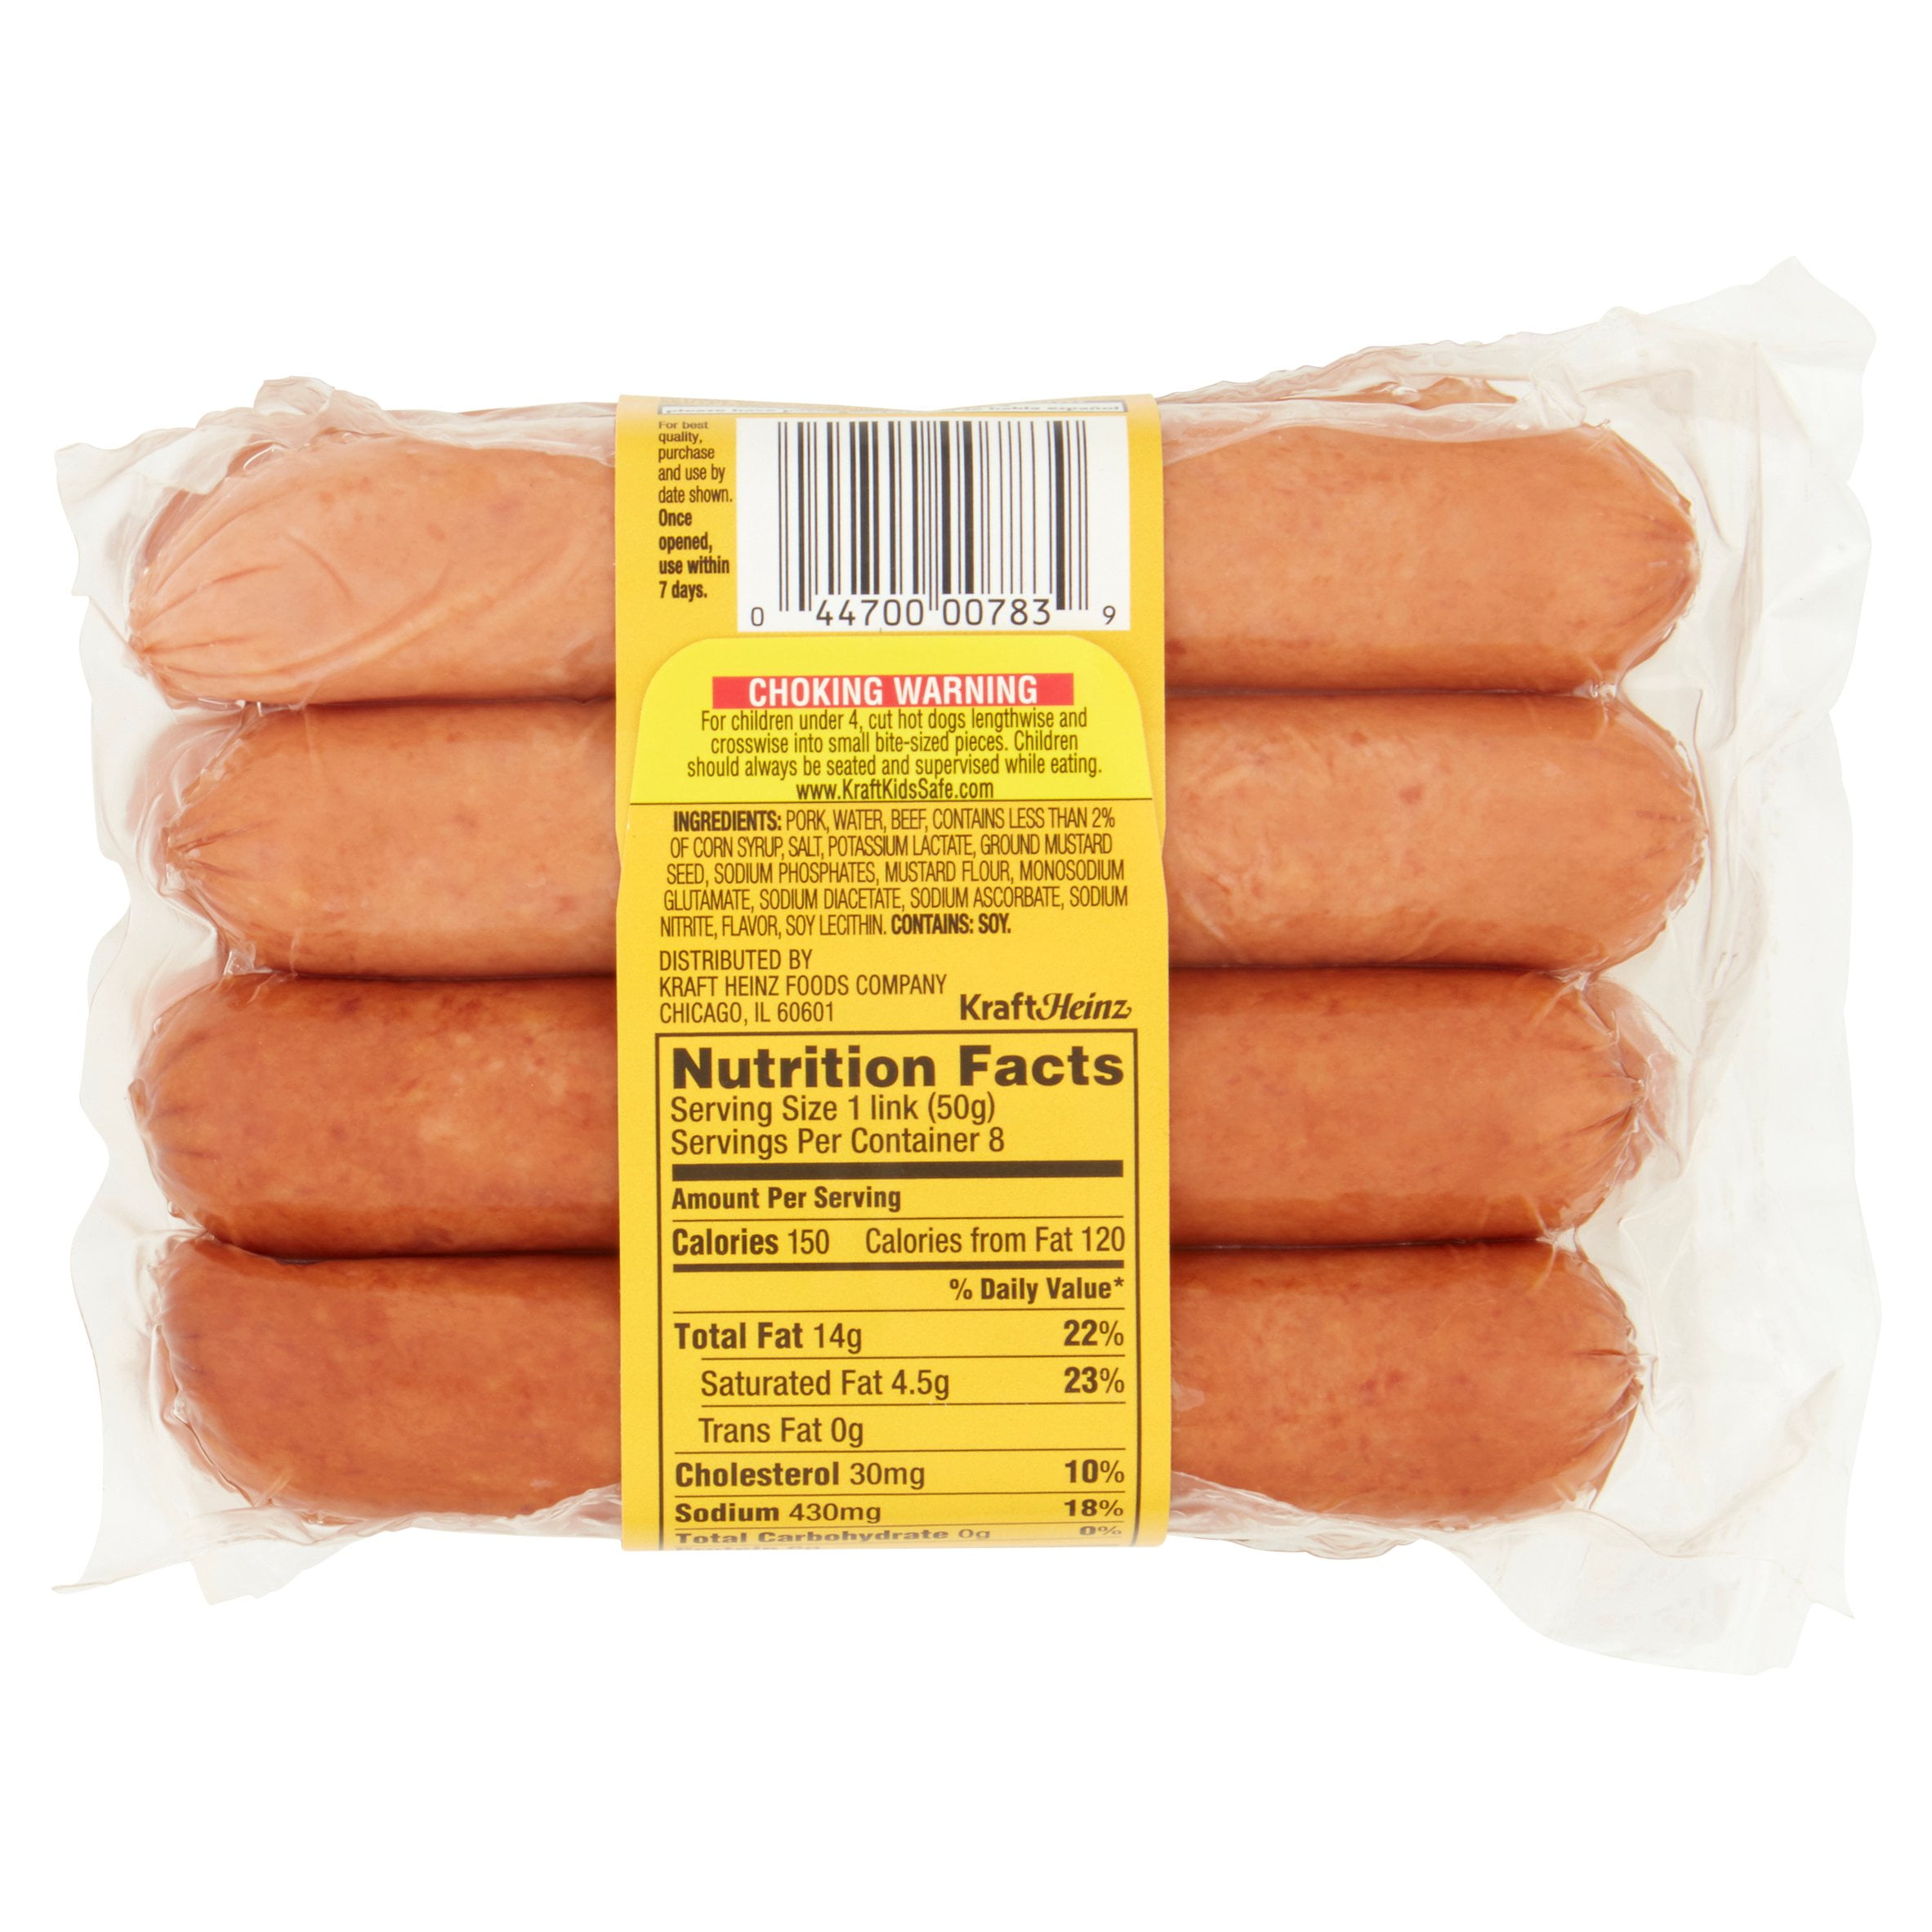 Oscar Mayer Smokies Hardwood Smoked Sausage 14 Oz Walmart within Nutrition Facts 711 Hot Dog